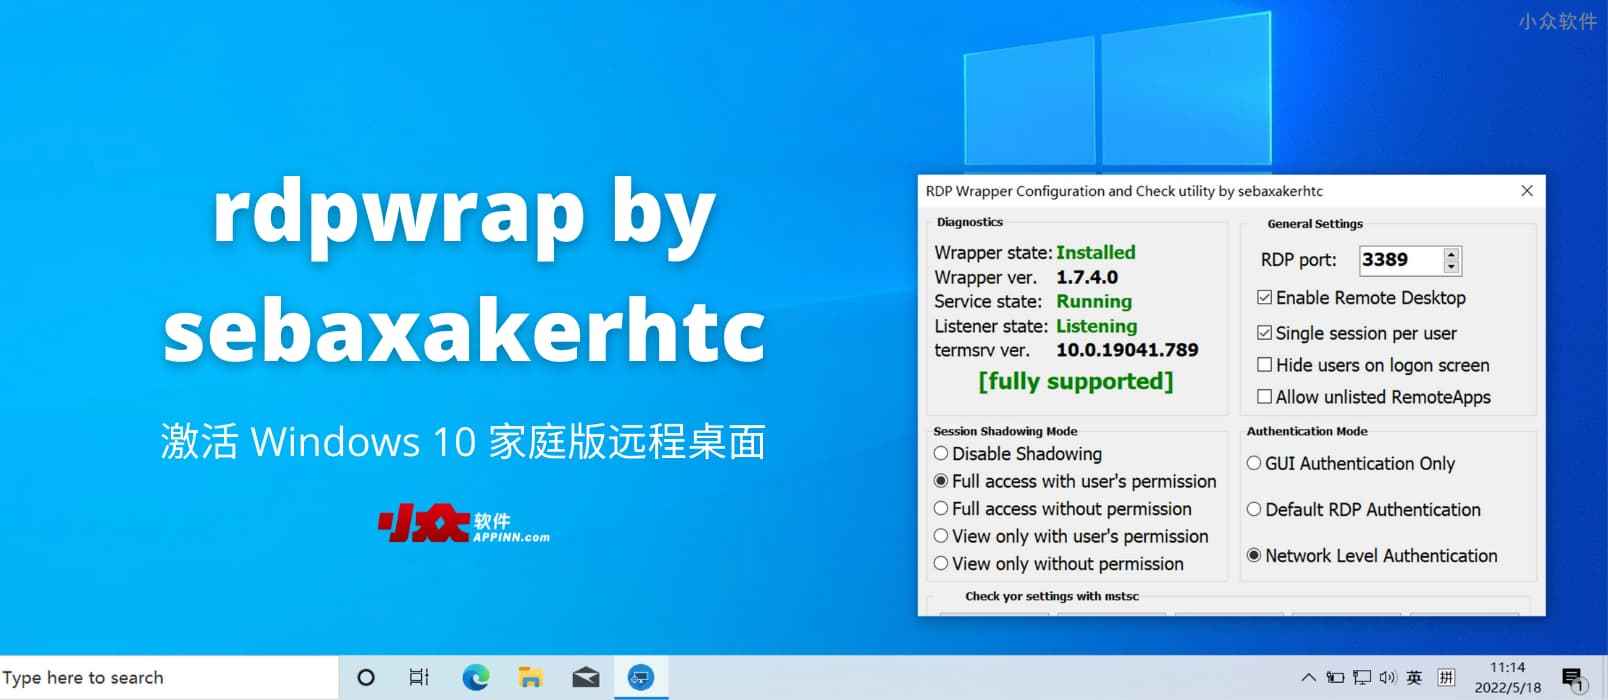 rdpwrap by sebaxakerhtc – 激活 Windows 10 家庭版的远程桌面